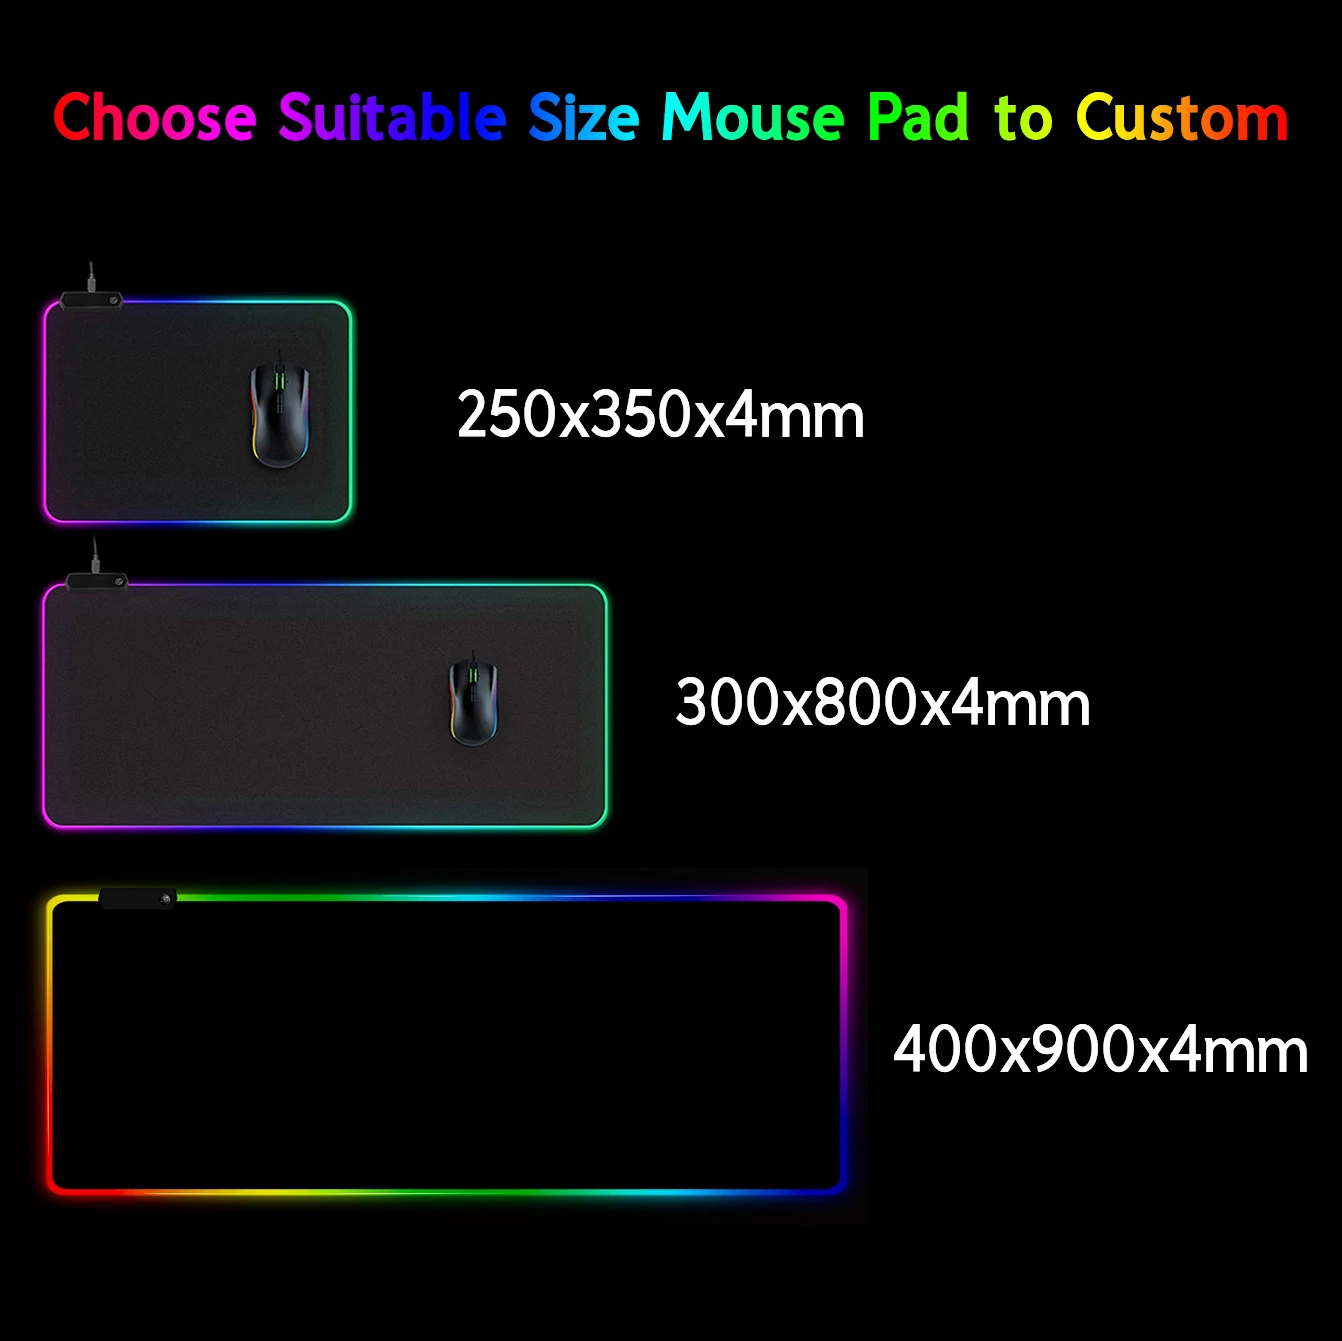 Mouse Pad Size Choosen-5.jpg